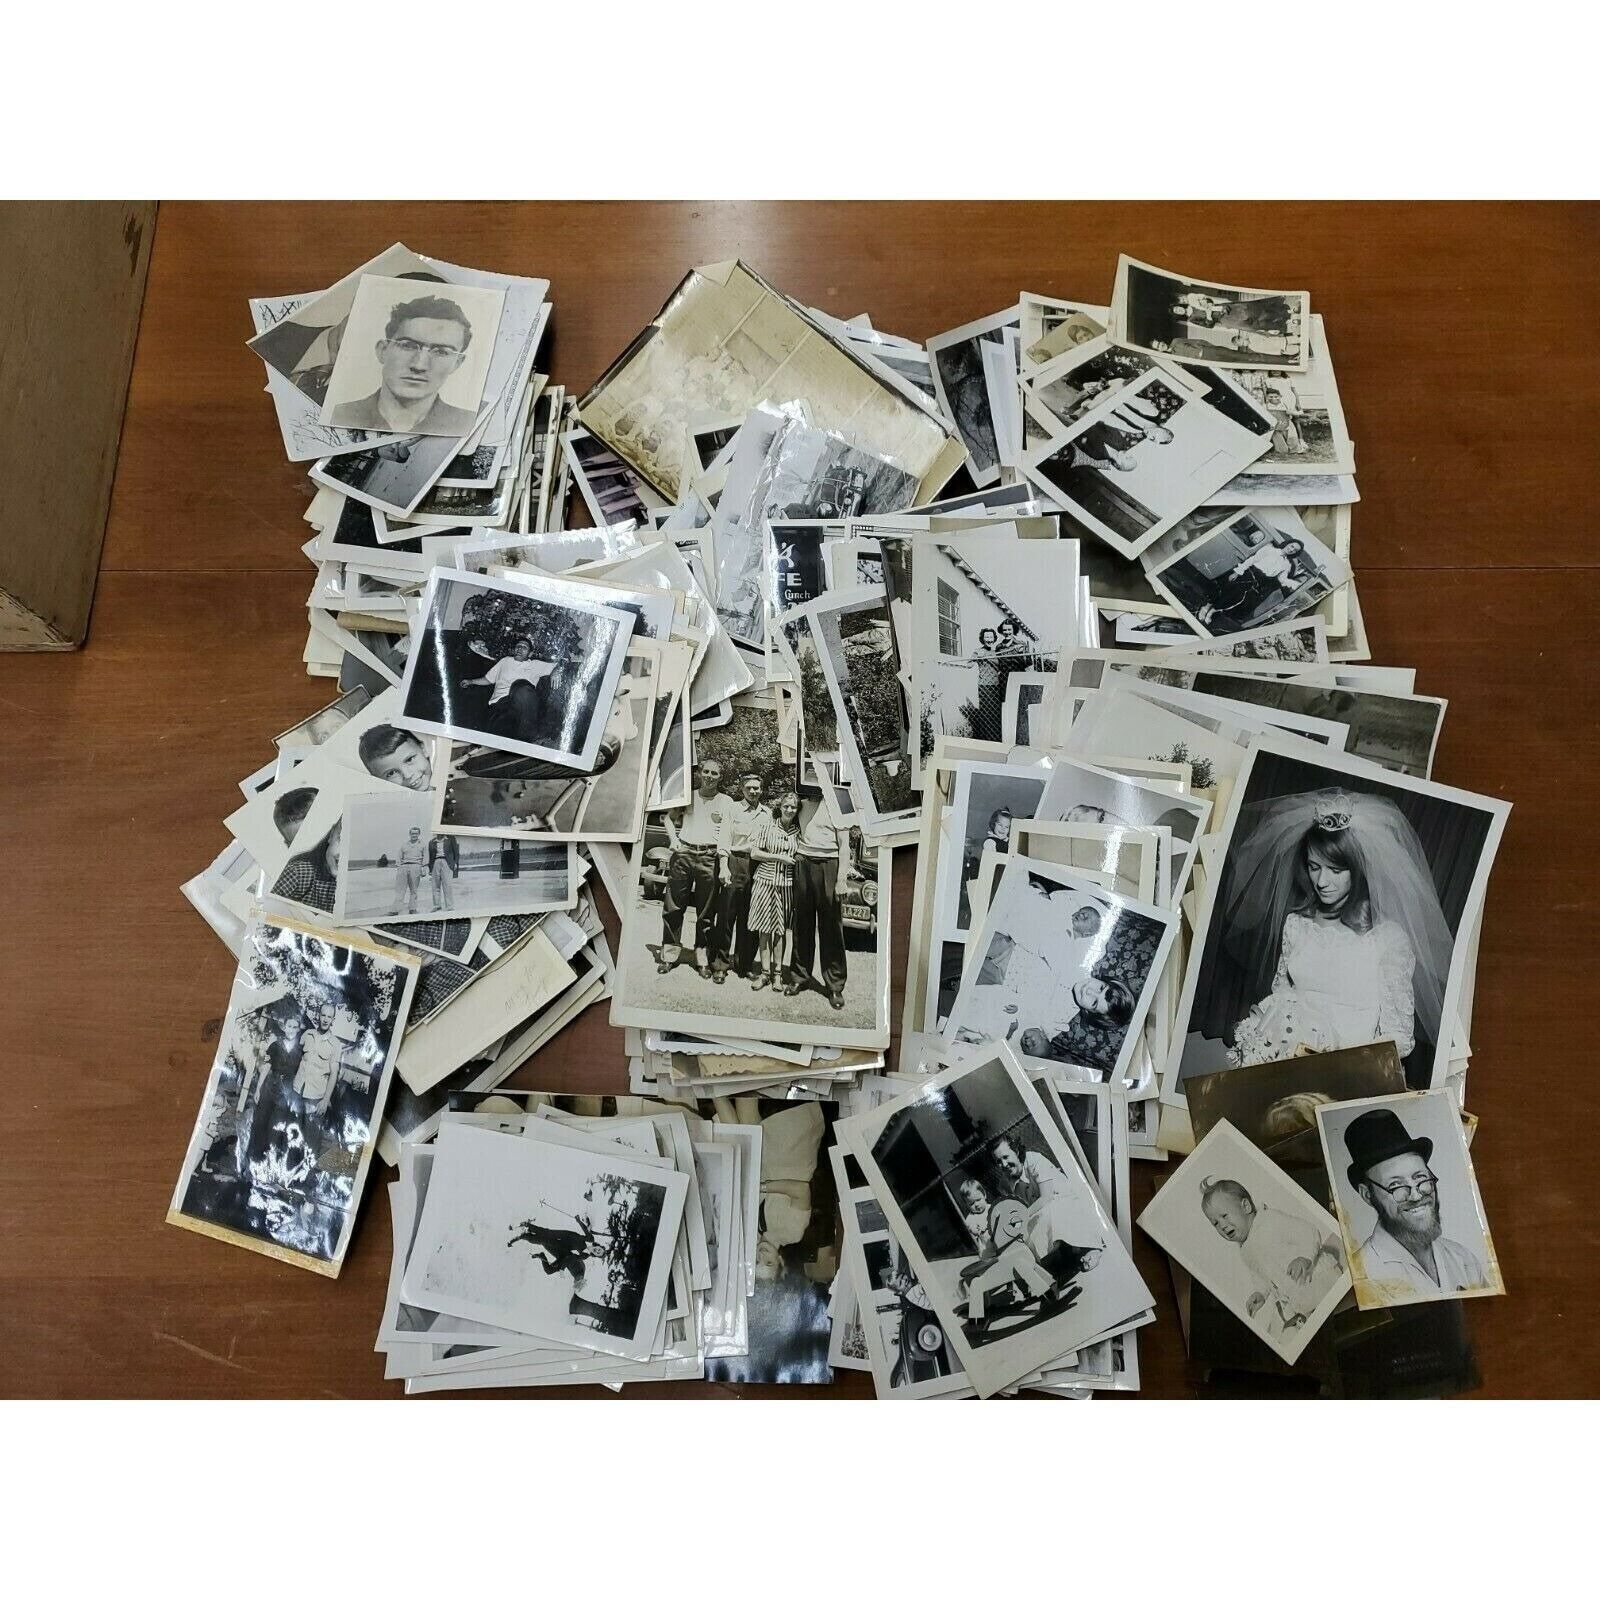 Lot OF 100 Original Random Found Old Photographs  B&W Vintage Snapshots